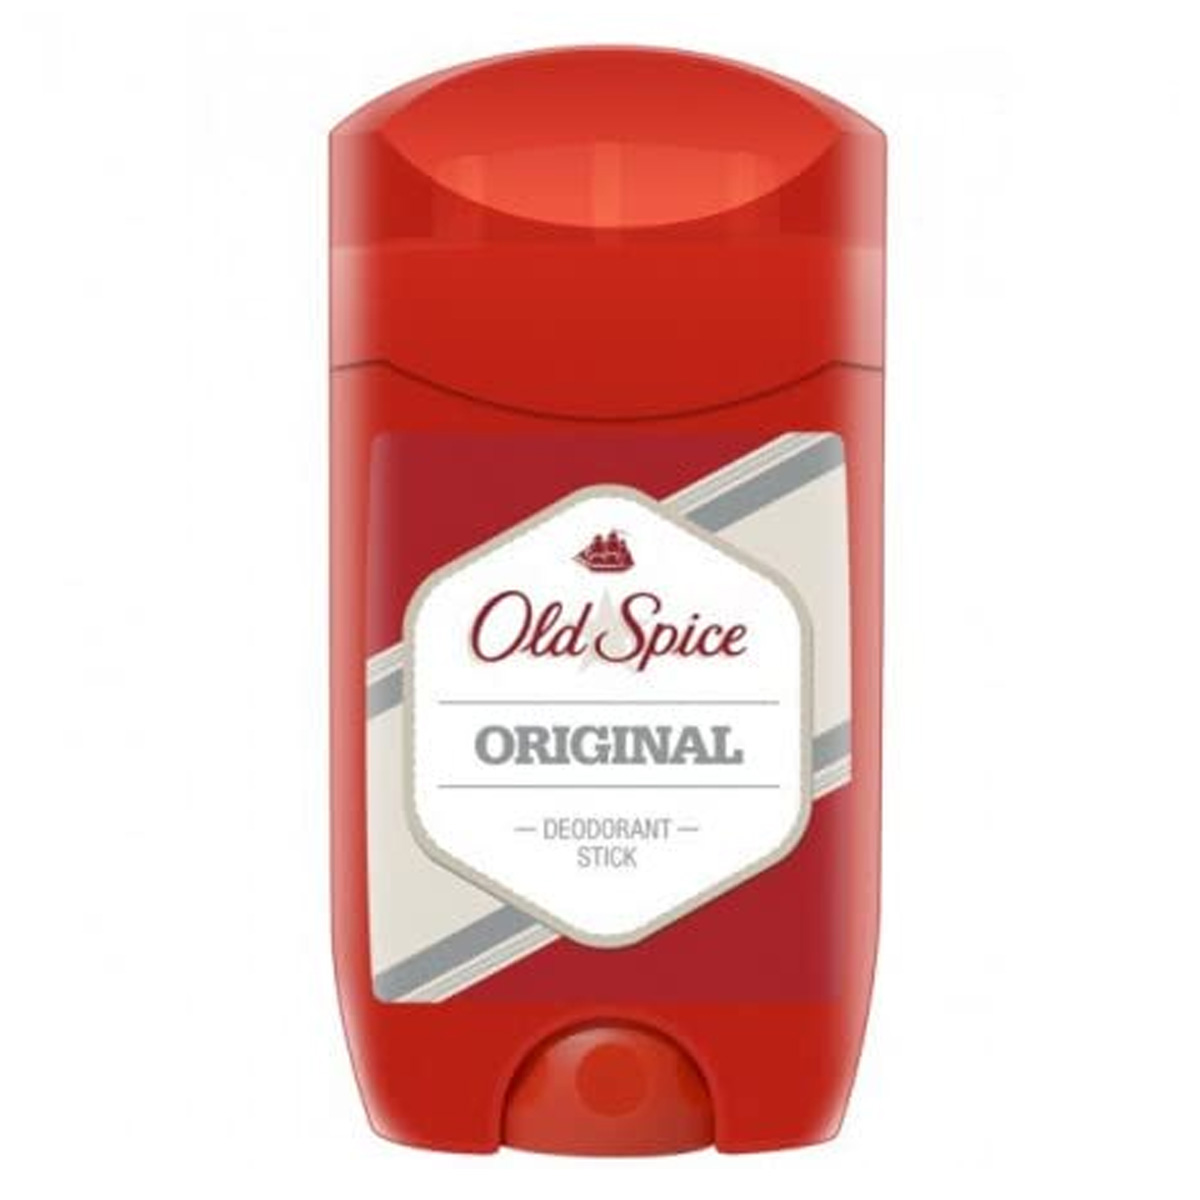 Old Spice Original Deodorant Stick, 50ml